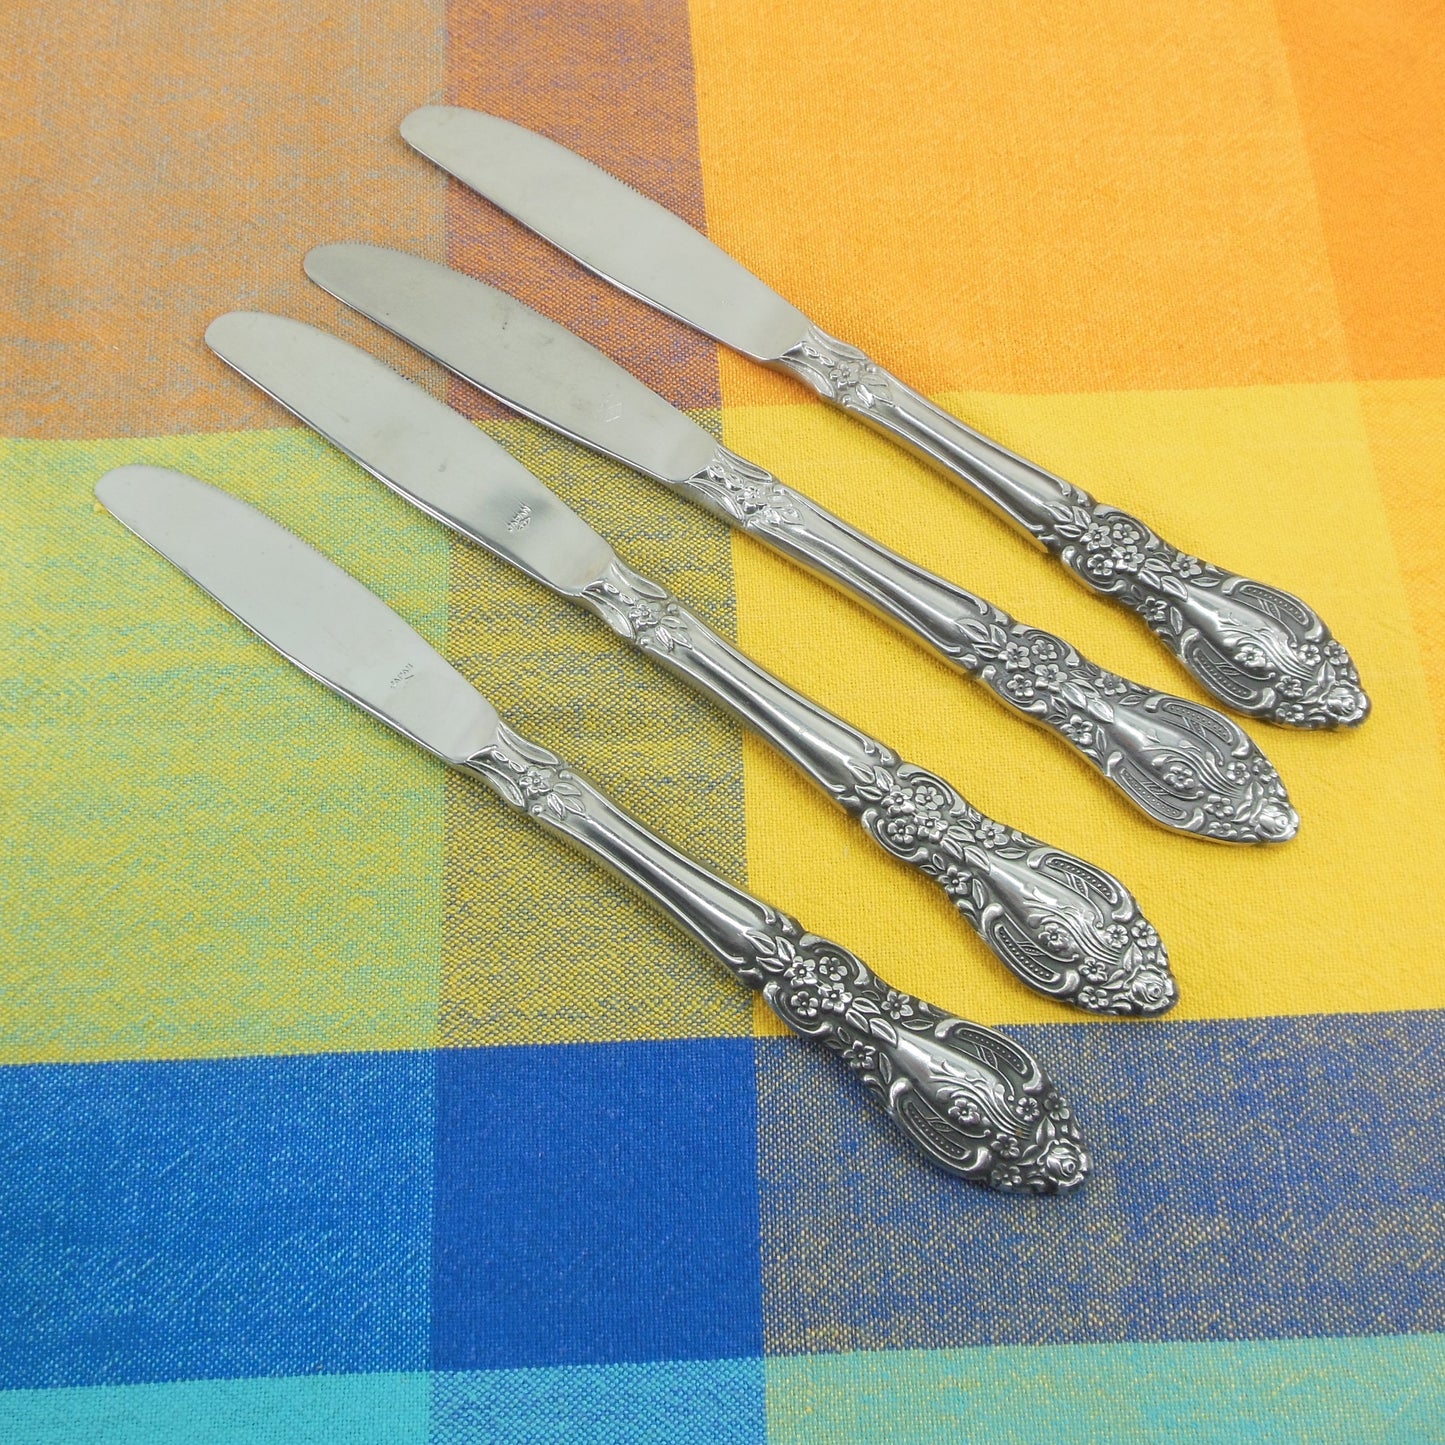 Springtime Japan Unknown Maker Stainless Flatware - 4 Dinner Knives